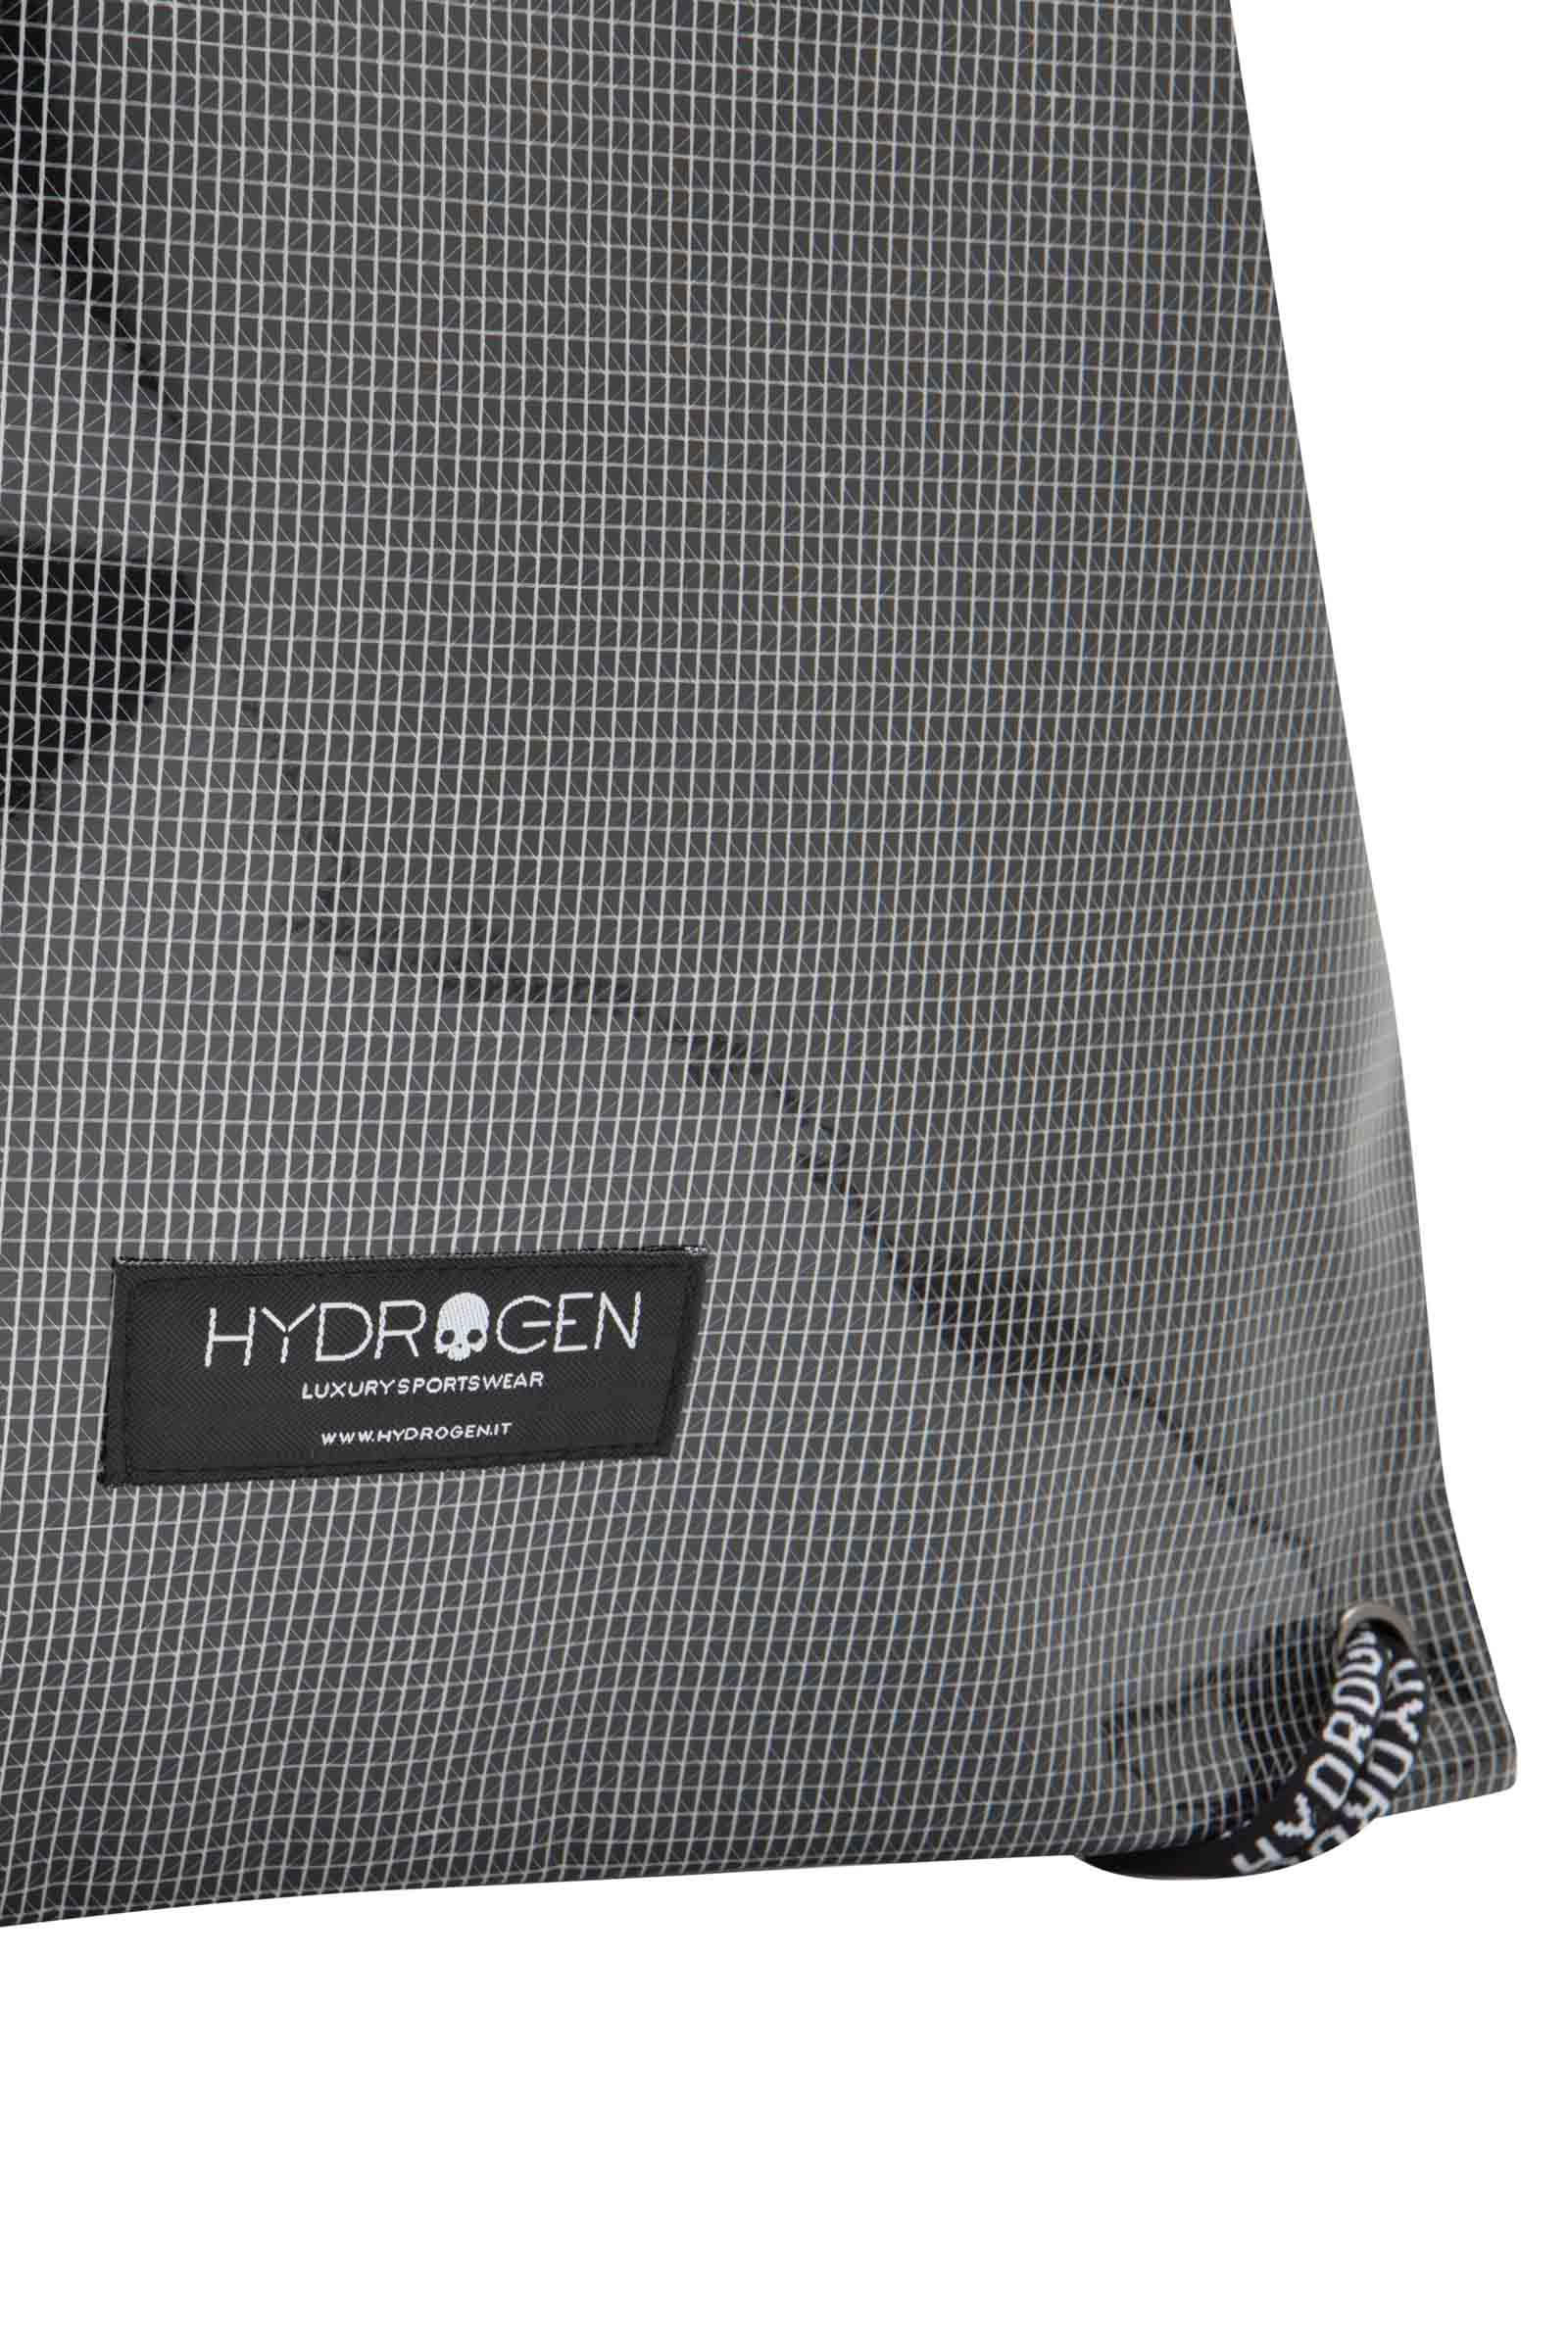 GYM BAG - Outlet Hydrogen - Luxury Sportwear